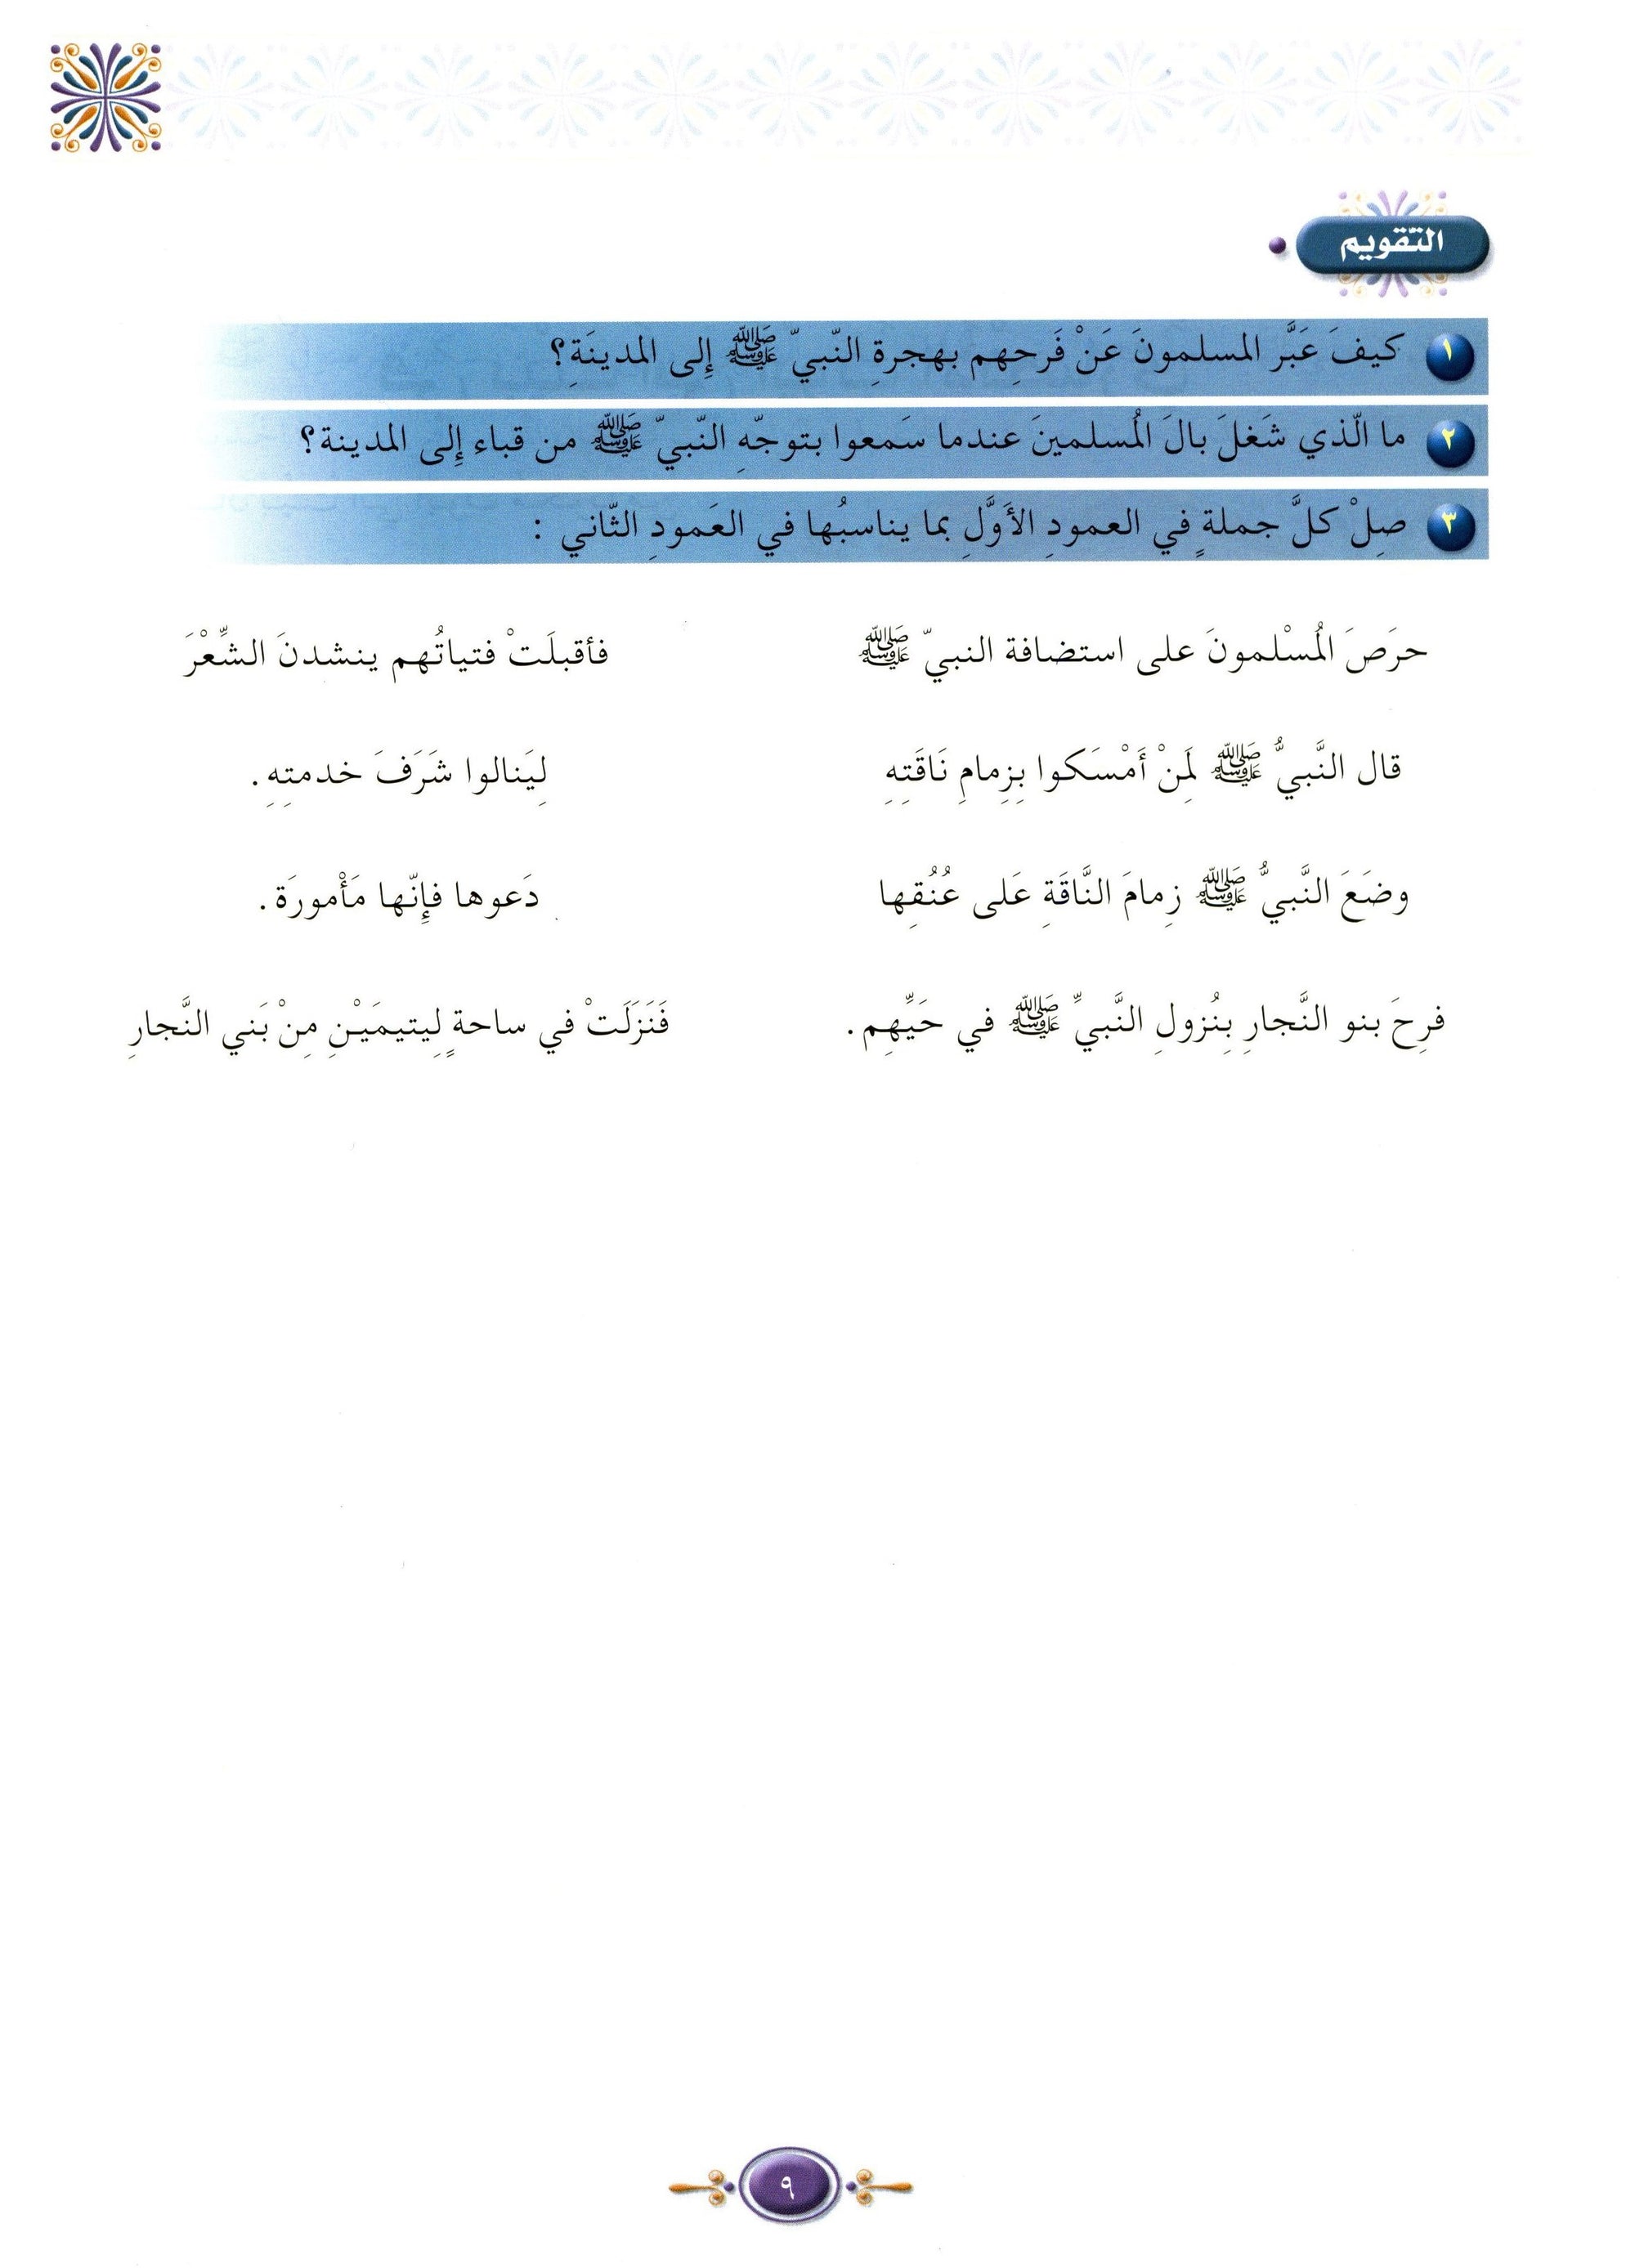 Islamic Knowledge Series - Biography of the Prophet Life in Madinah سلسلة العلوم الإسلامية السيرة النبوية العهد المدني